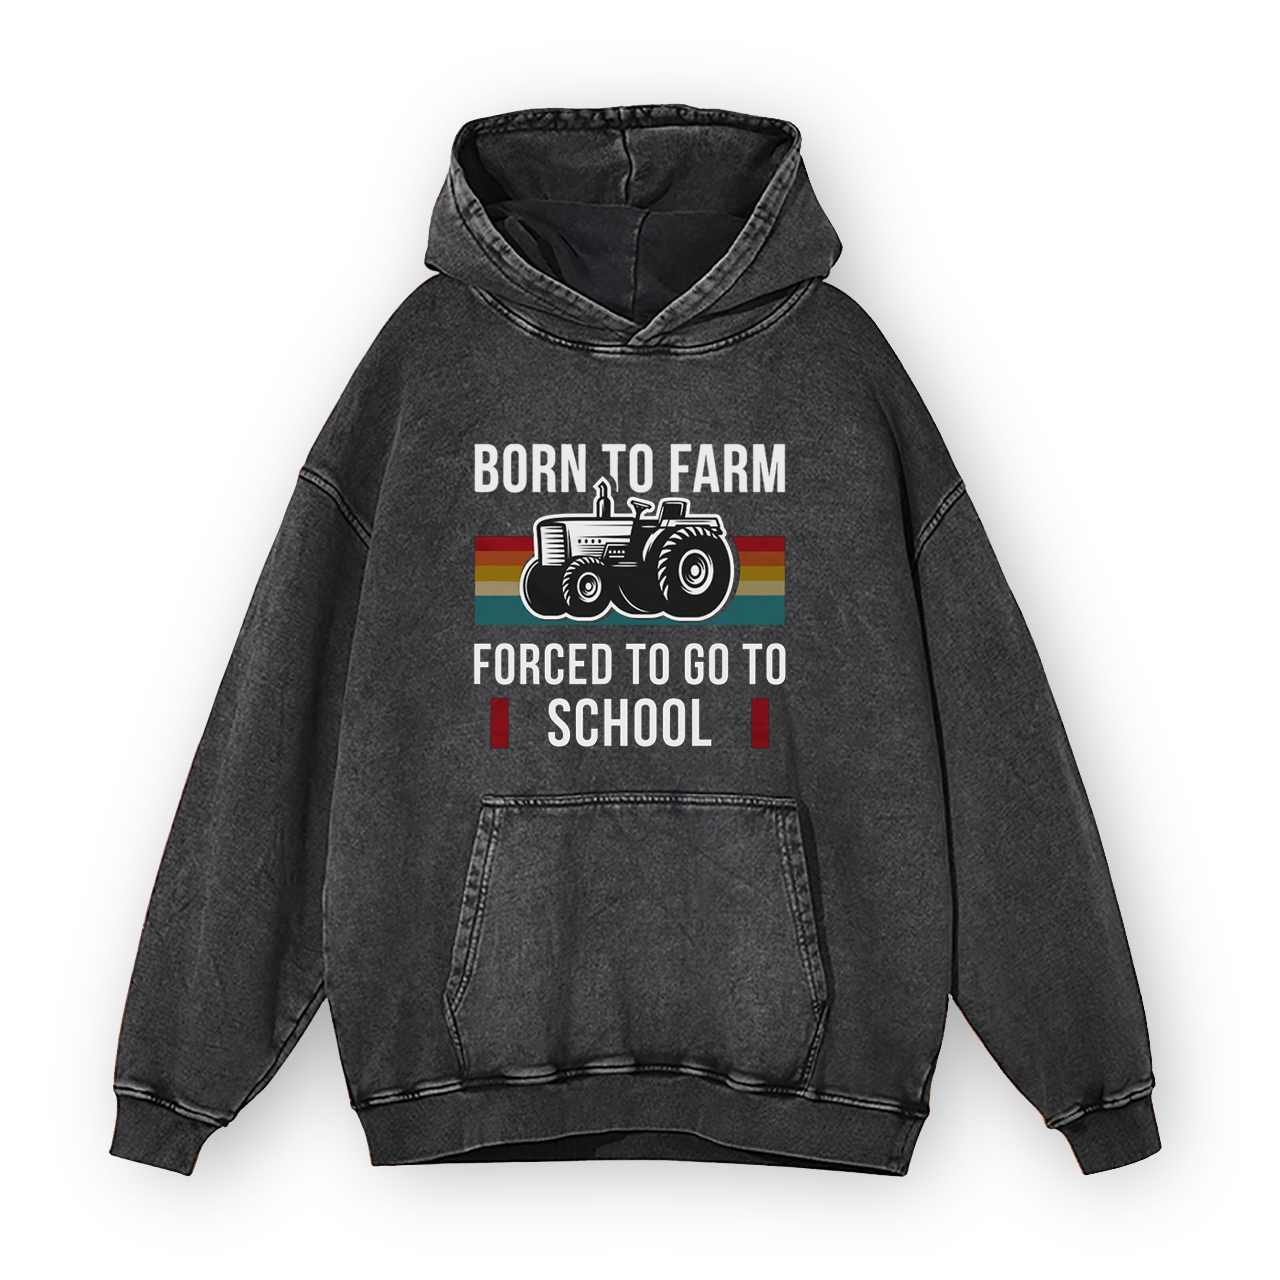 Born to Farm Forced to Go to School Garment-Dye Hoodies